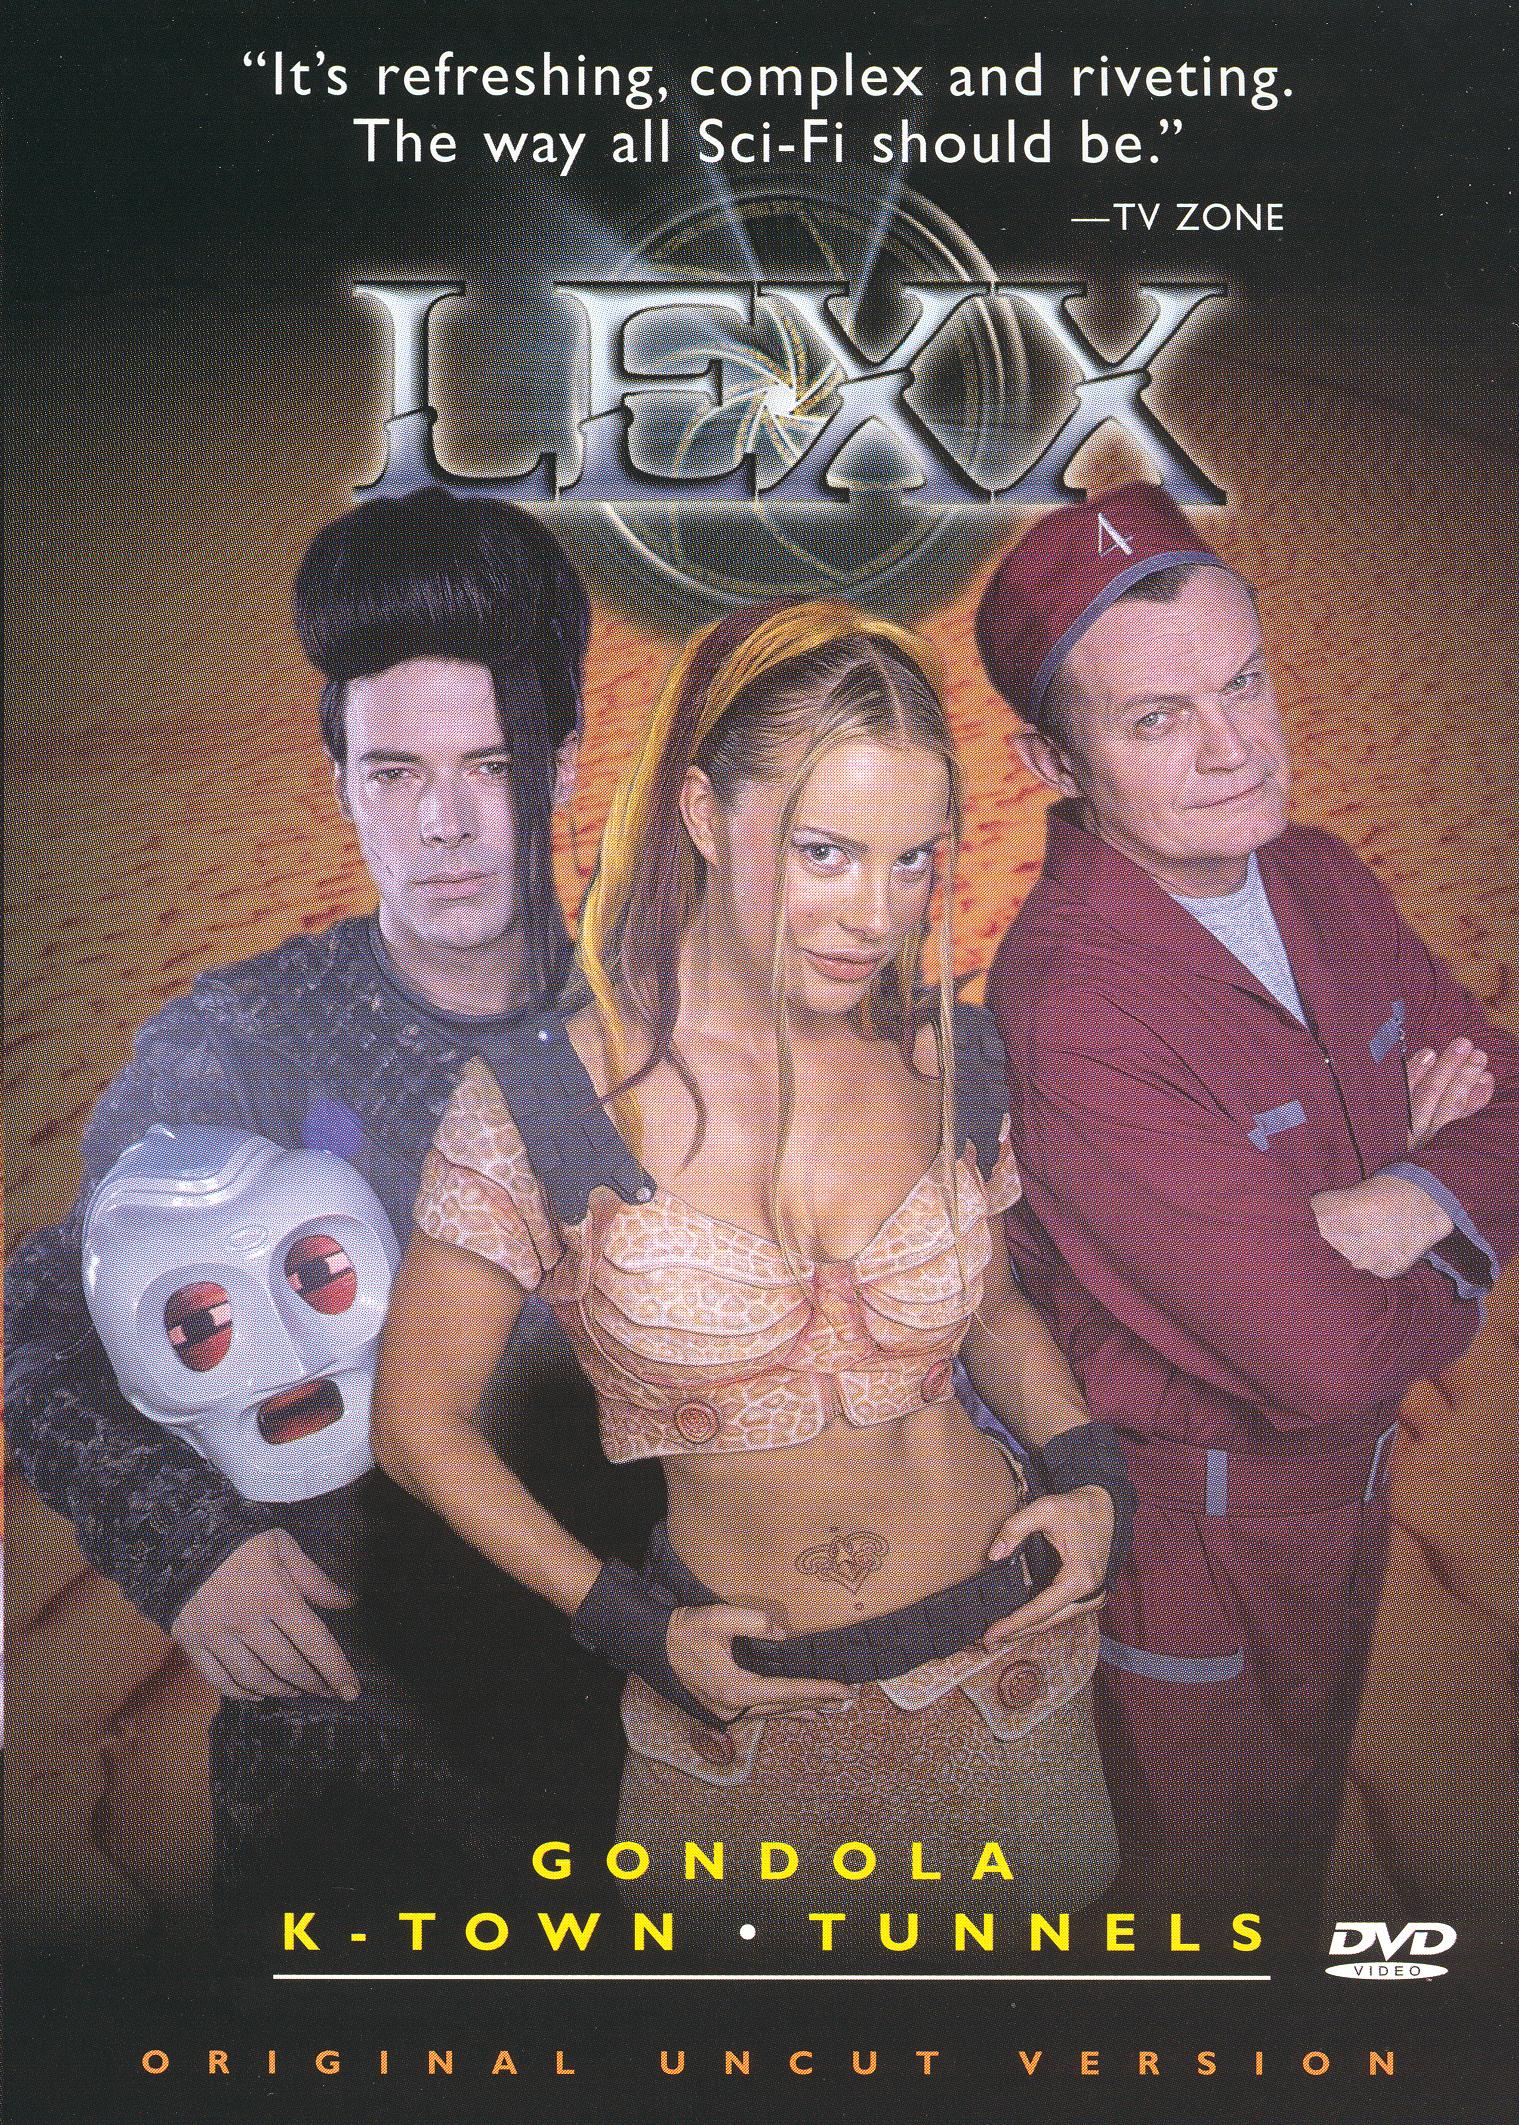 Geektastic Film Reviews: Lexx 4.0: Giga Shadow